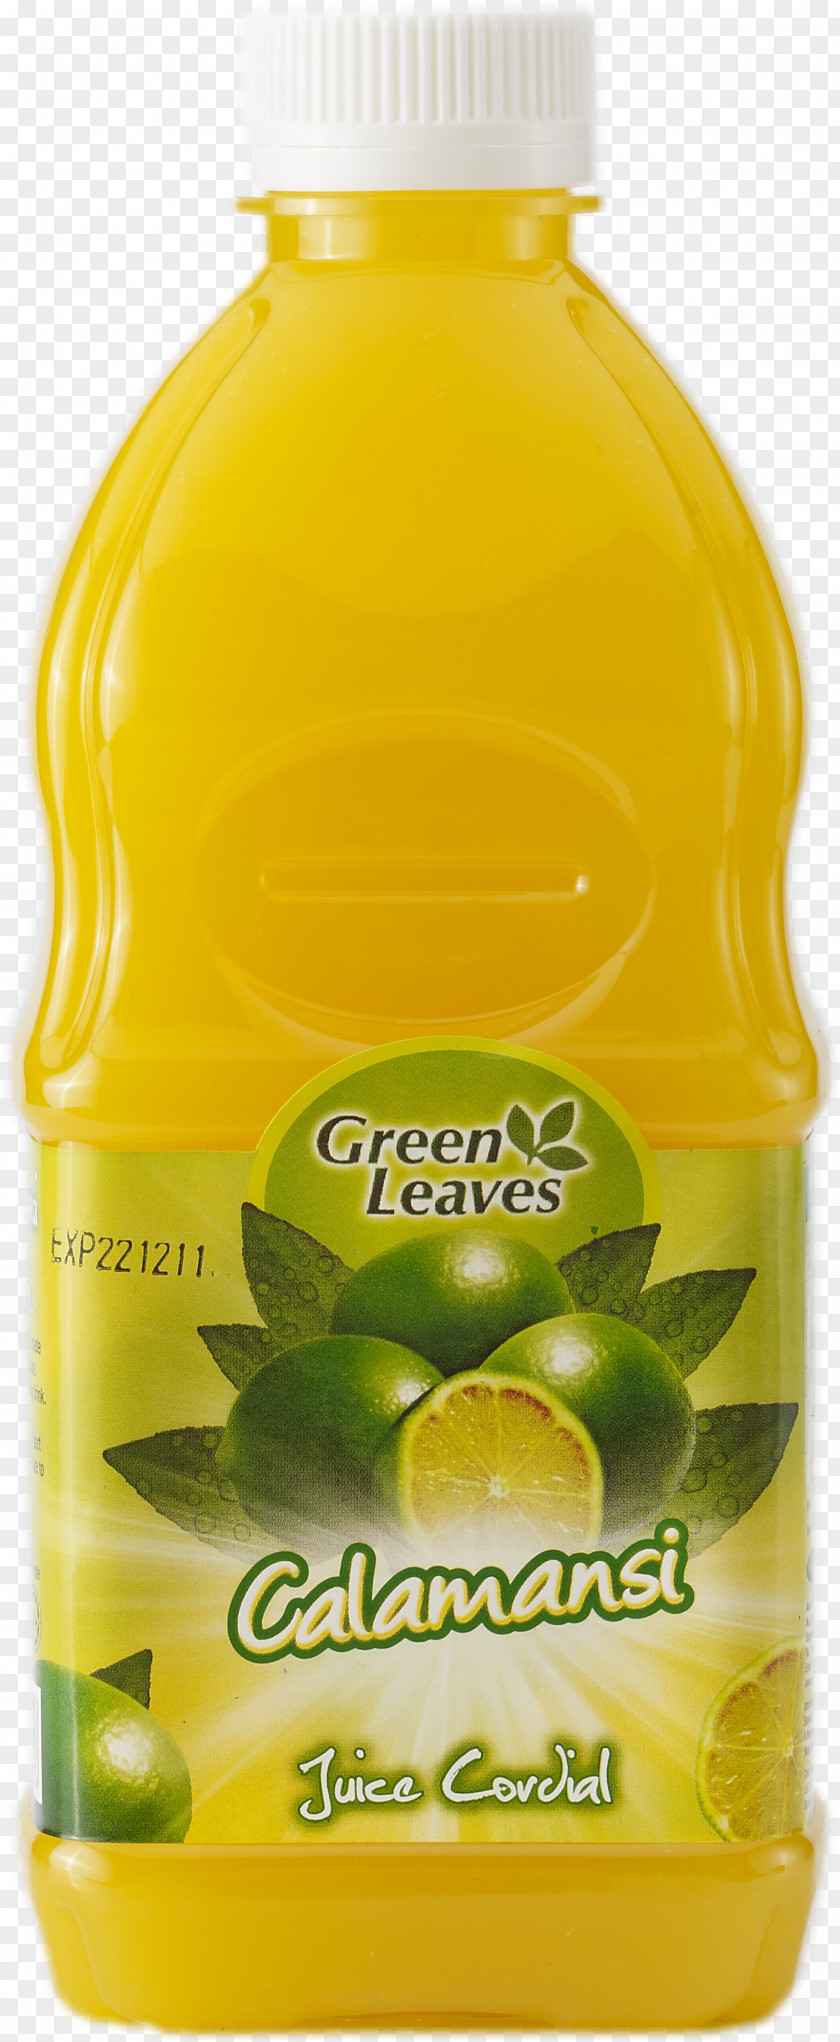 Lemon Lemon-lime Drink Squash Juice Orange PNG